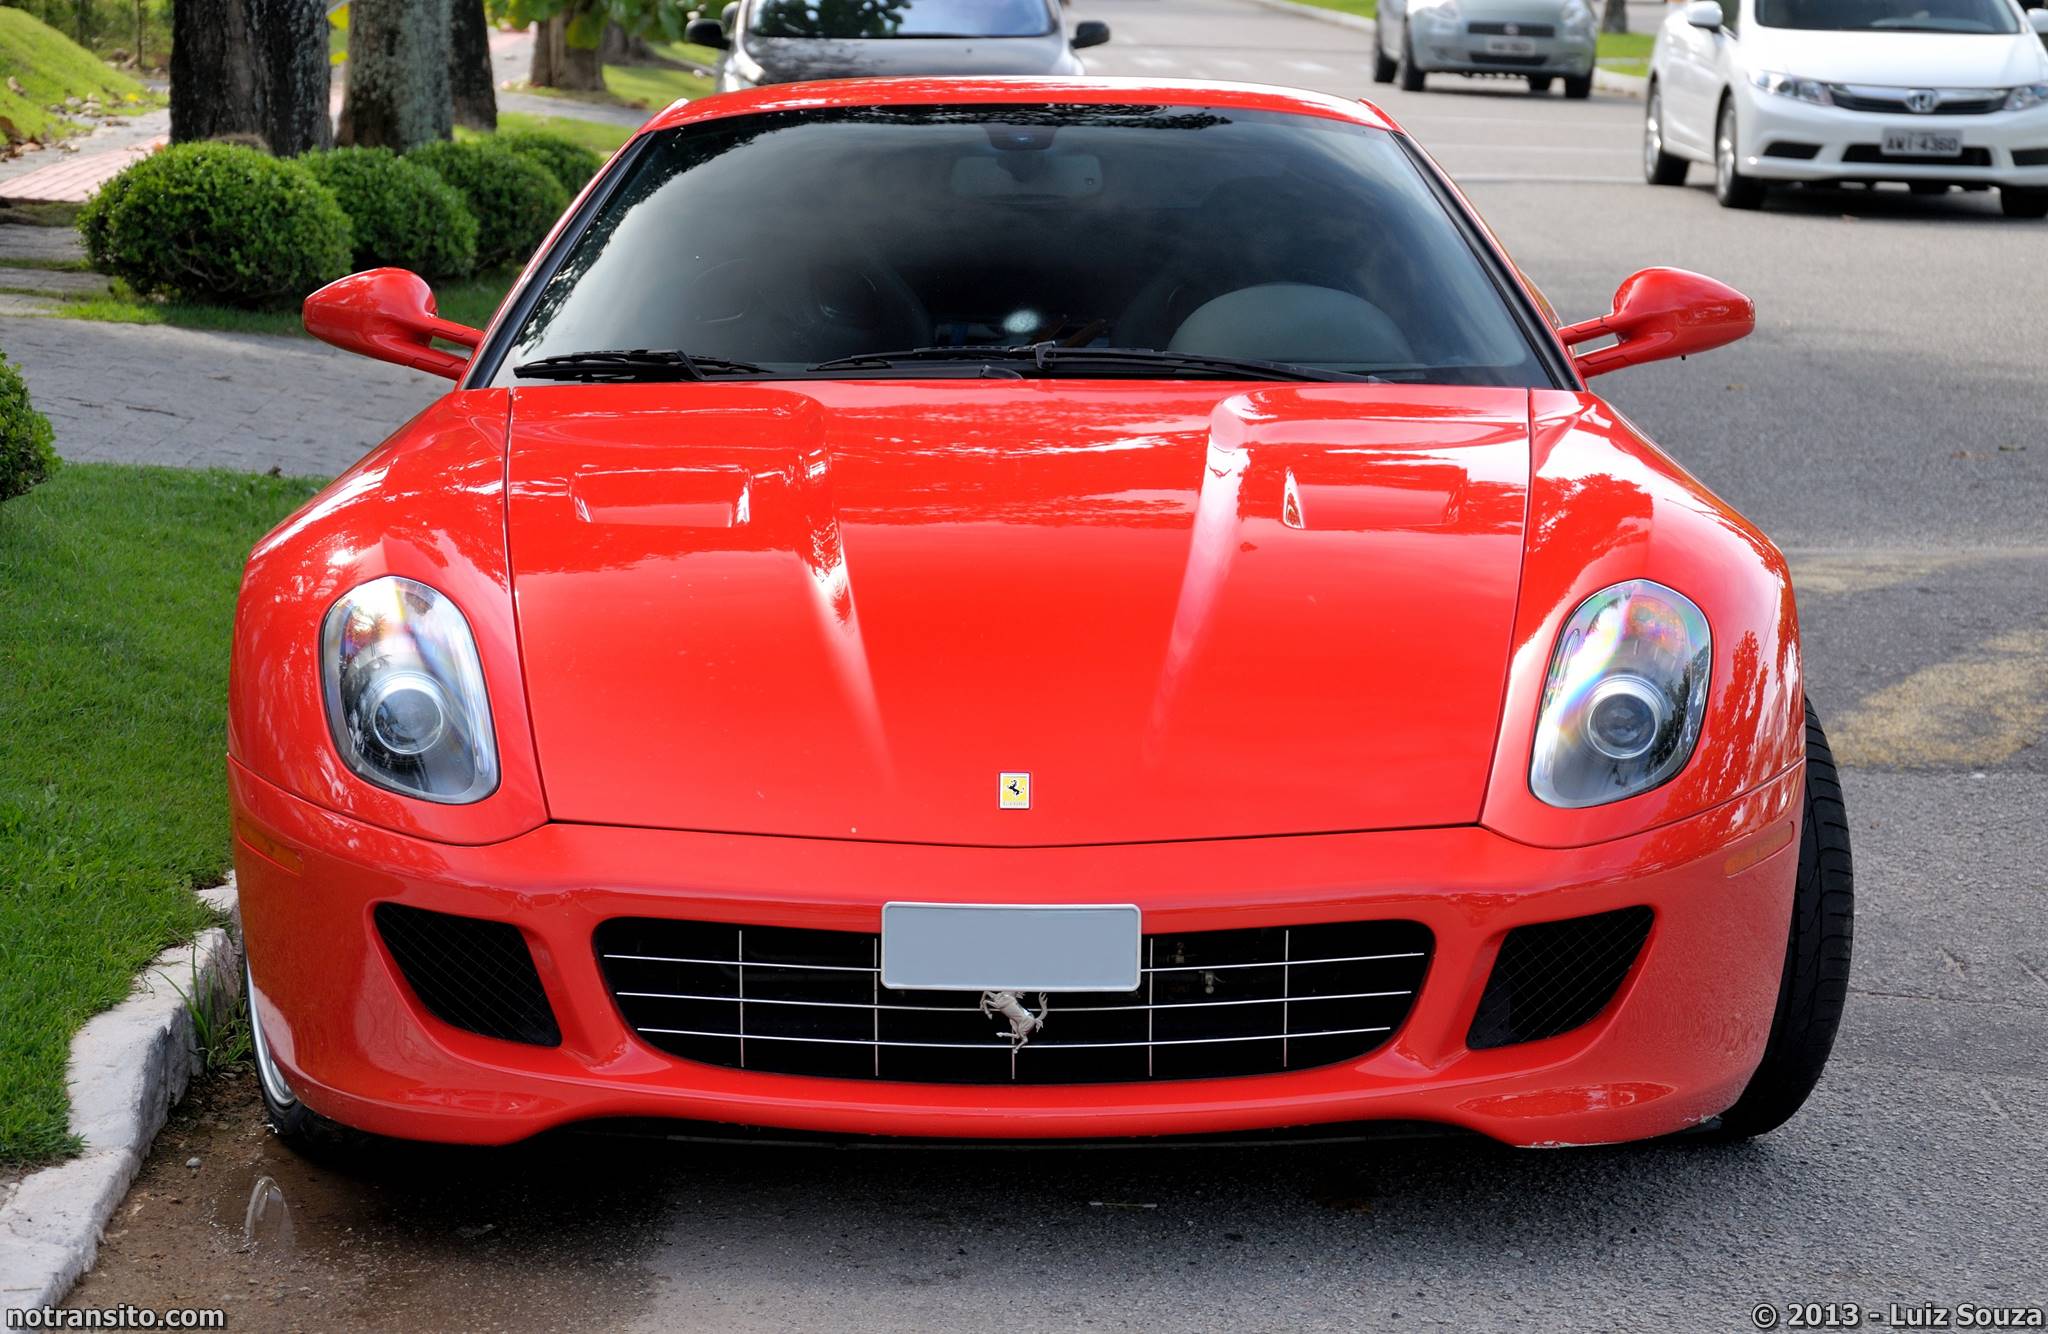 Ferrari 599 GTB Fiorano, Jurerê Internacional, Supercarros em Jurerê Internacional, Exóticos em Jurerê Internacional